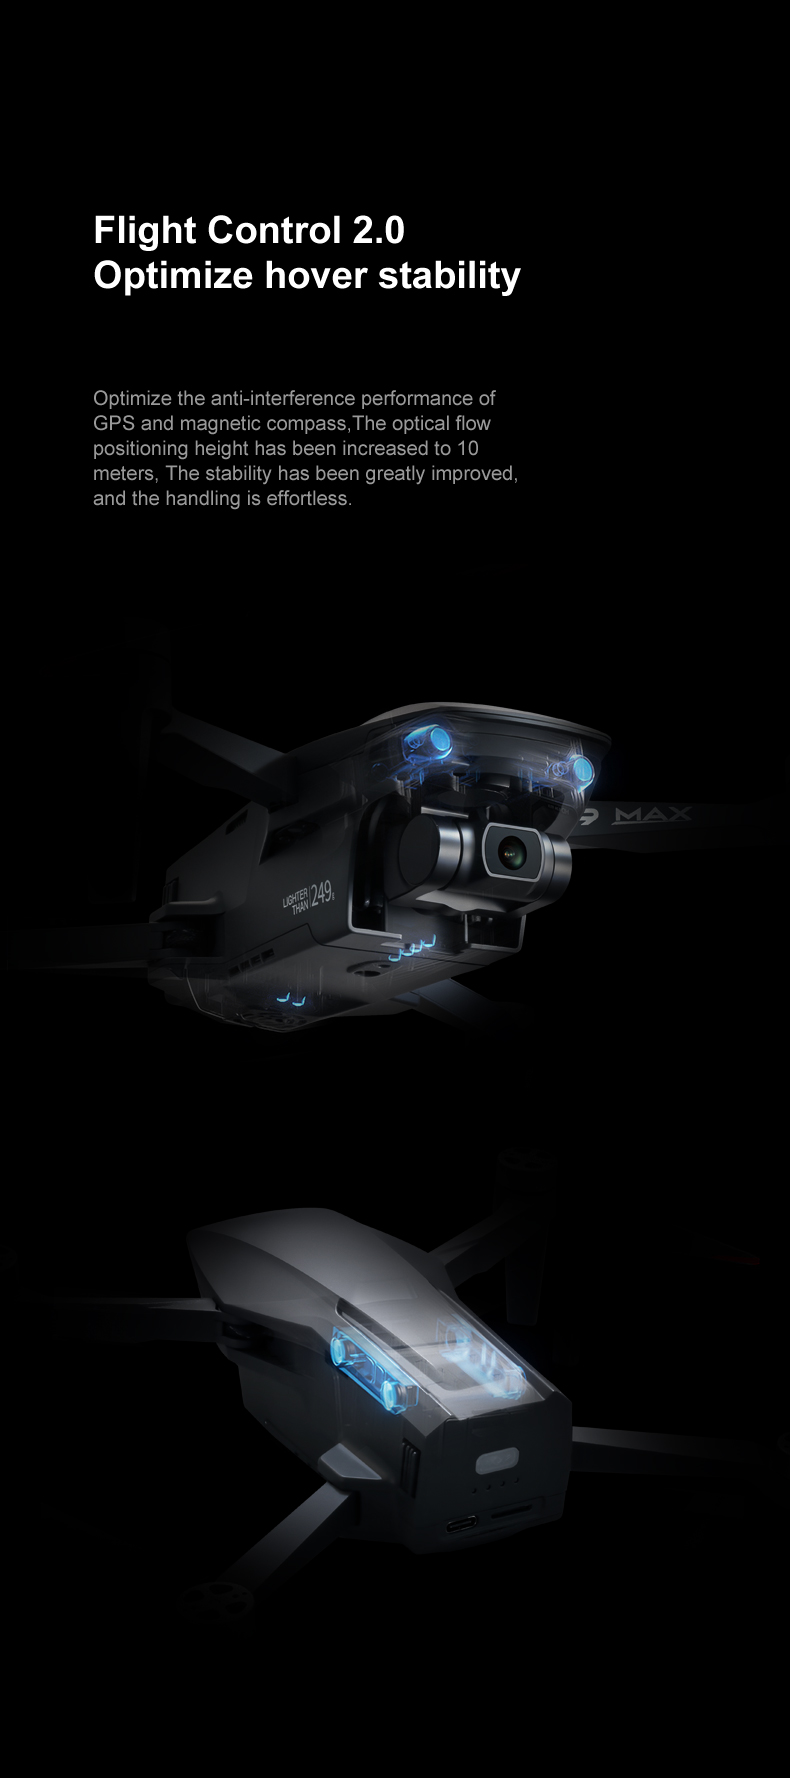 Faith Mini 4K Drone | 3-Axis Gimbal | 4K Video Camera